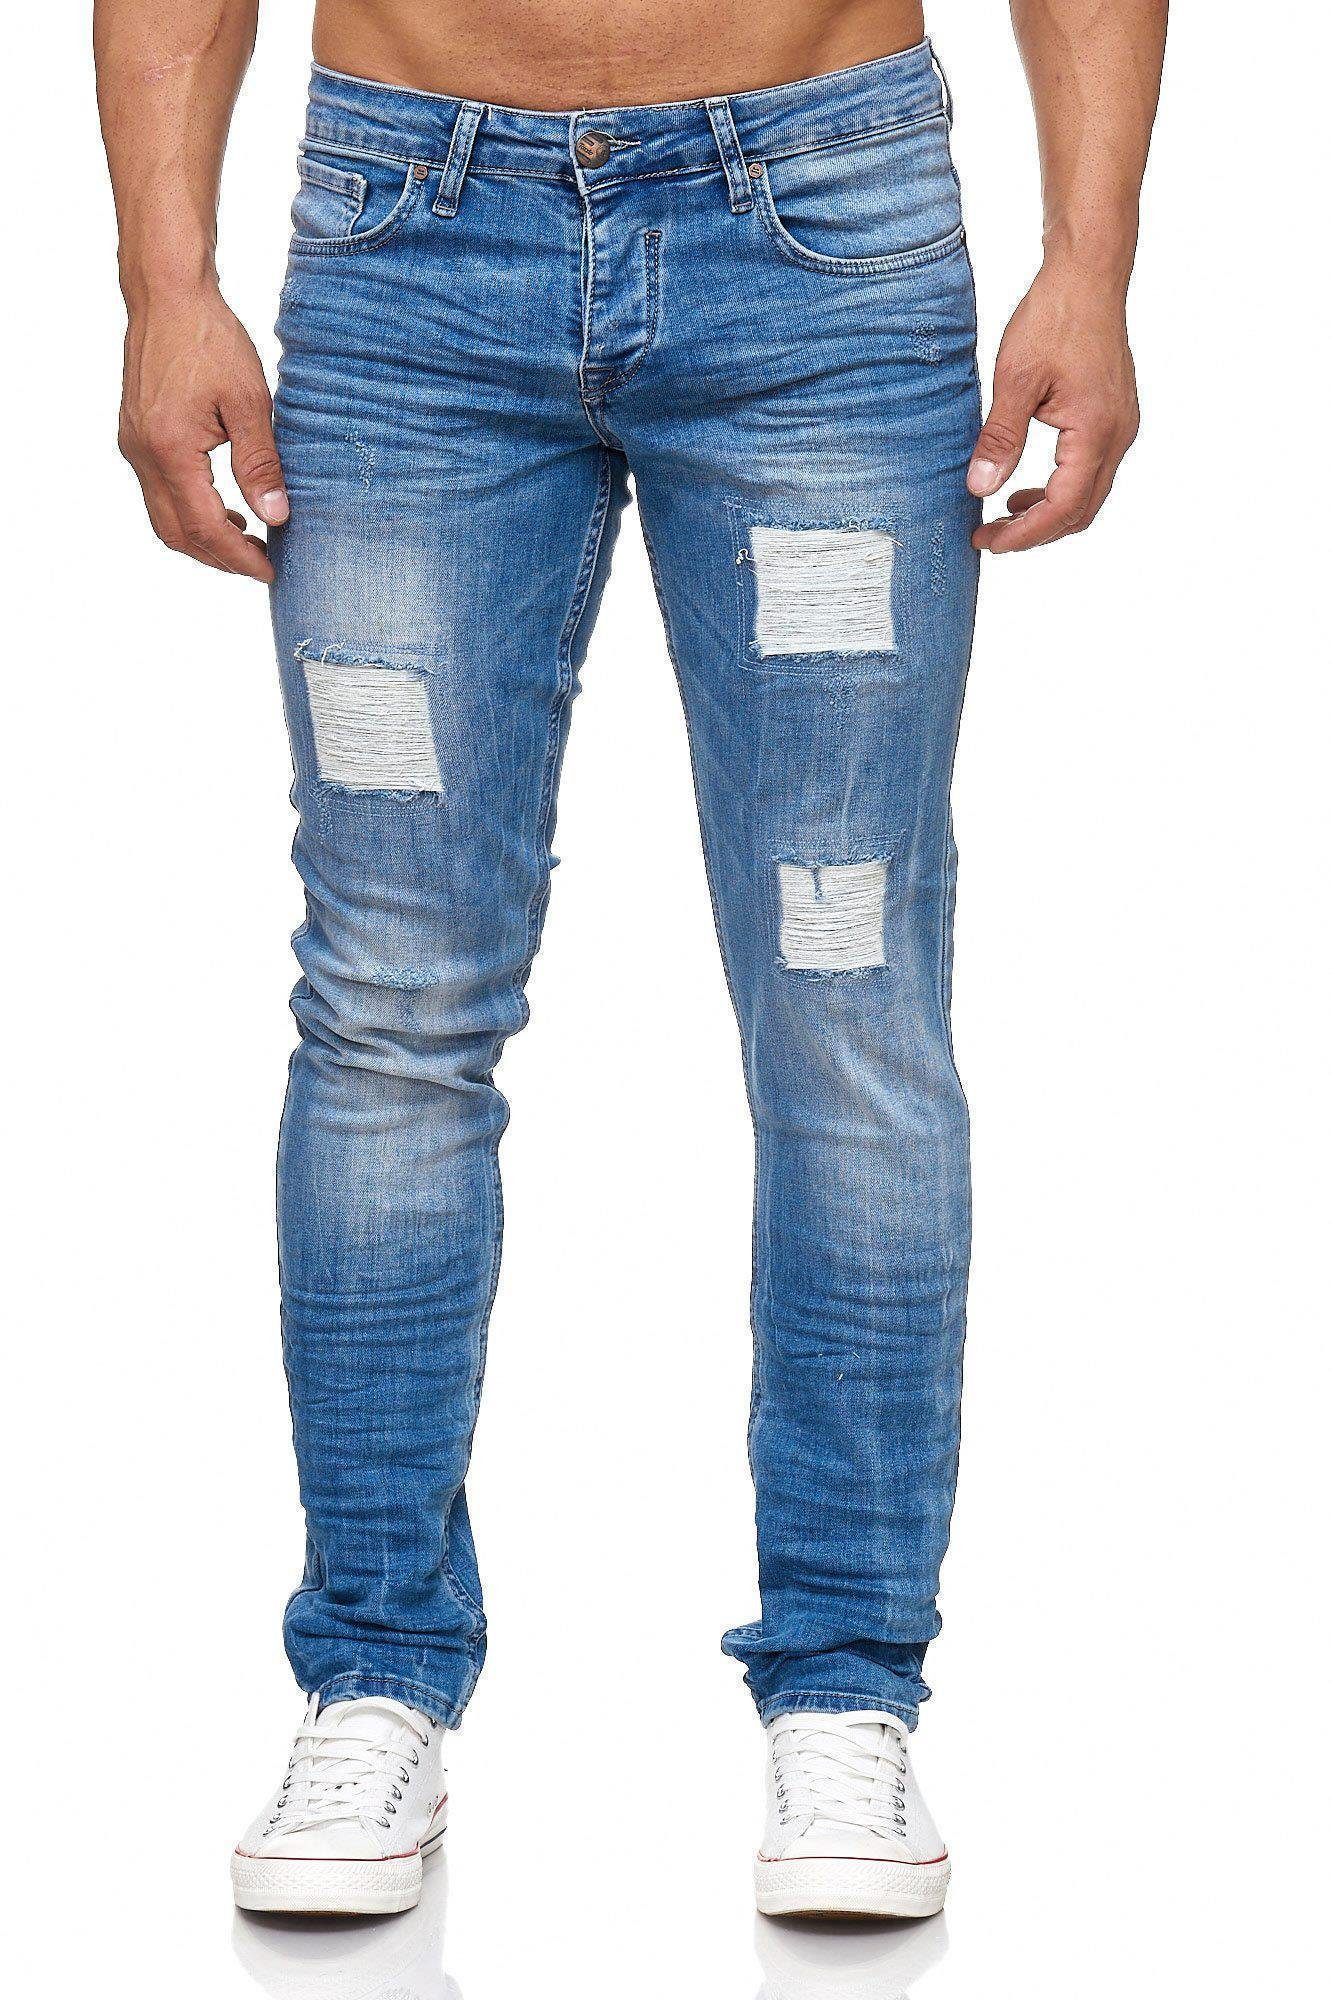 Tazzio Straight-Jeans 17505 blau Destroyed-Look im